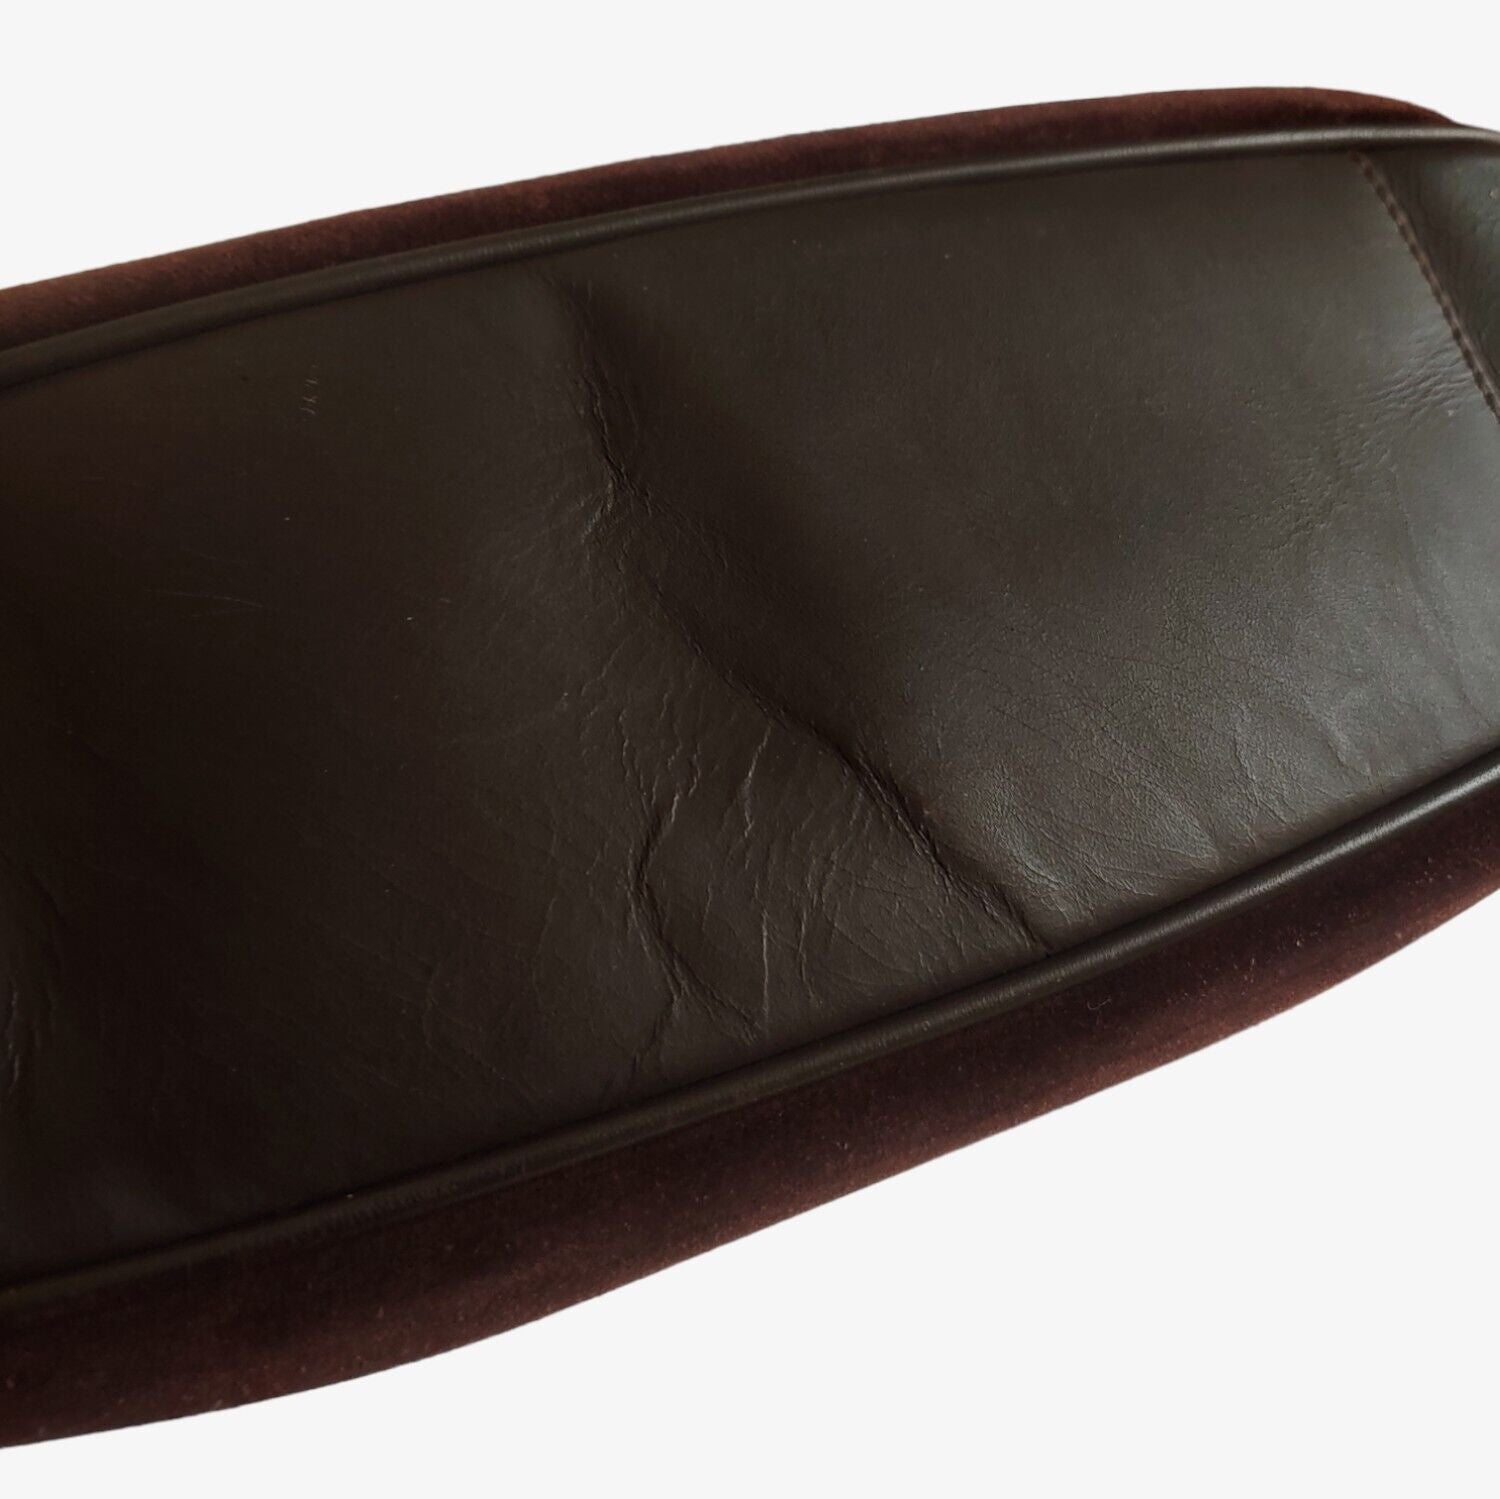 GUCCI Handbag 000.2058.0290.0 Bamboo 2way vintage leather Brown